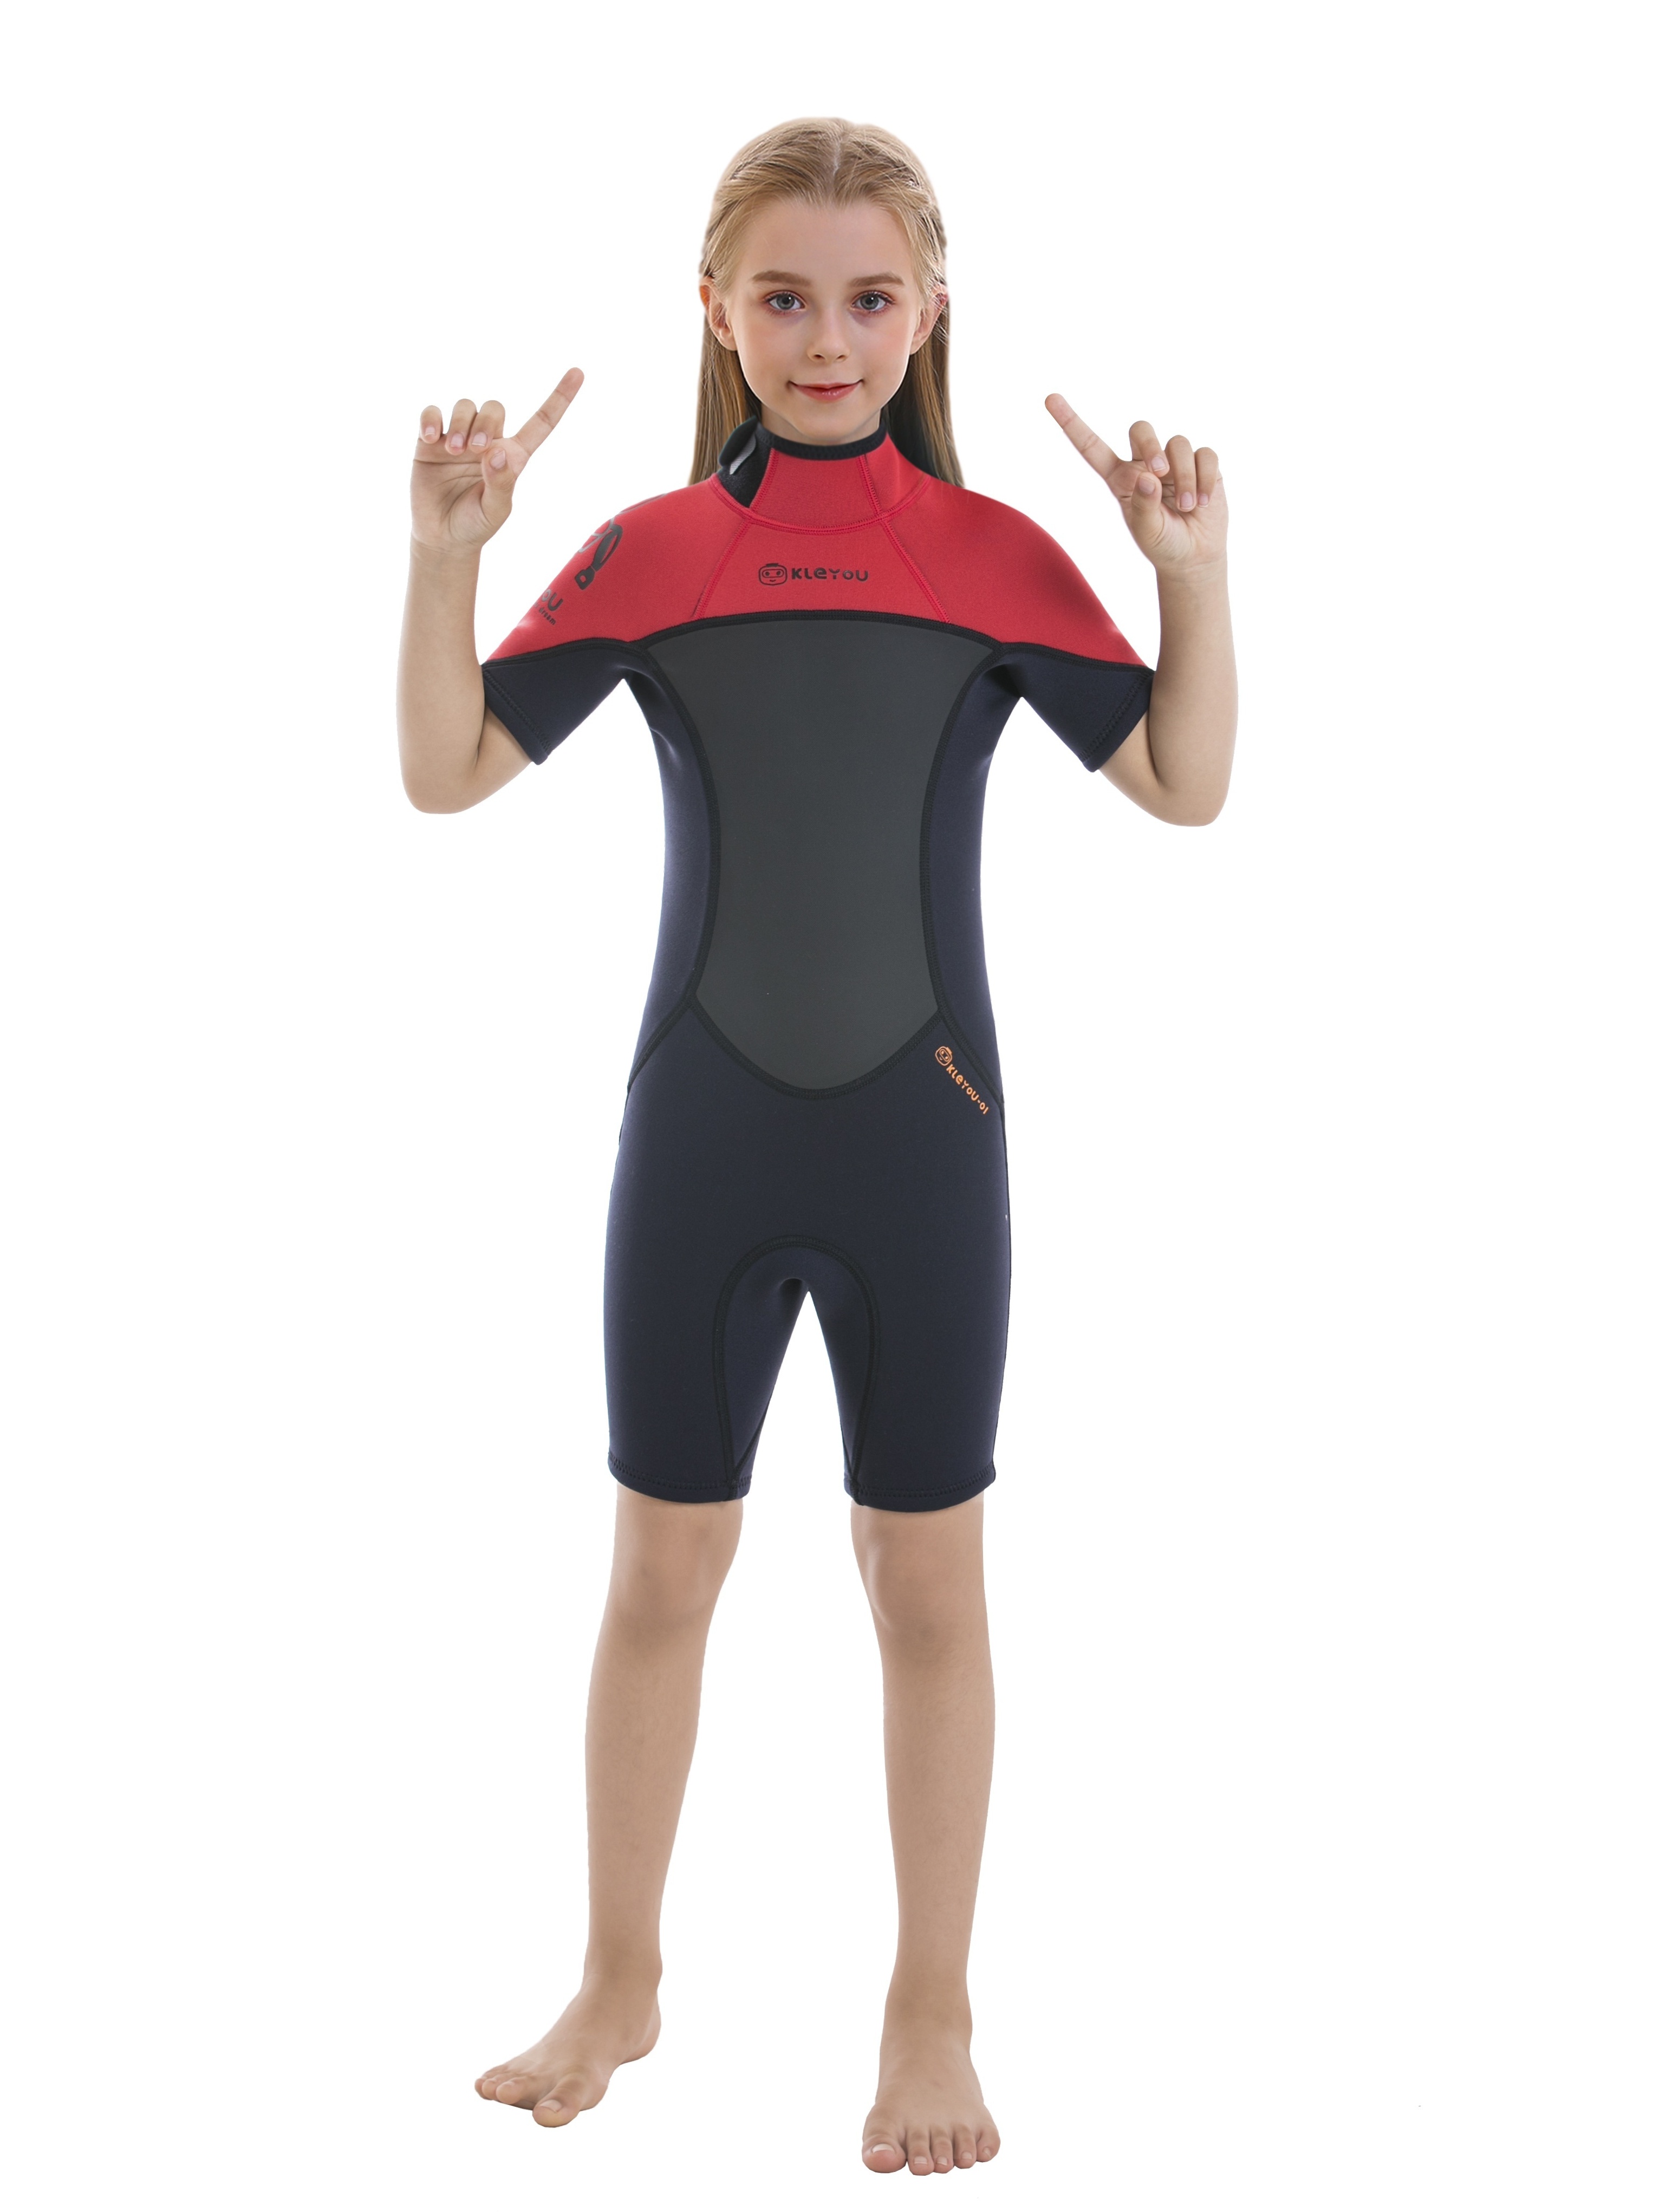  Wetsuit Kids For Children Boys Girls, Wet Suit Toddler 2t To  13t Youth 2.5mm Neoprene Swimsuits Long Sleeve Back Zipper Fullsuit For  Swimming Diving Surfing Water Sprot